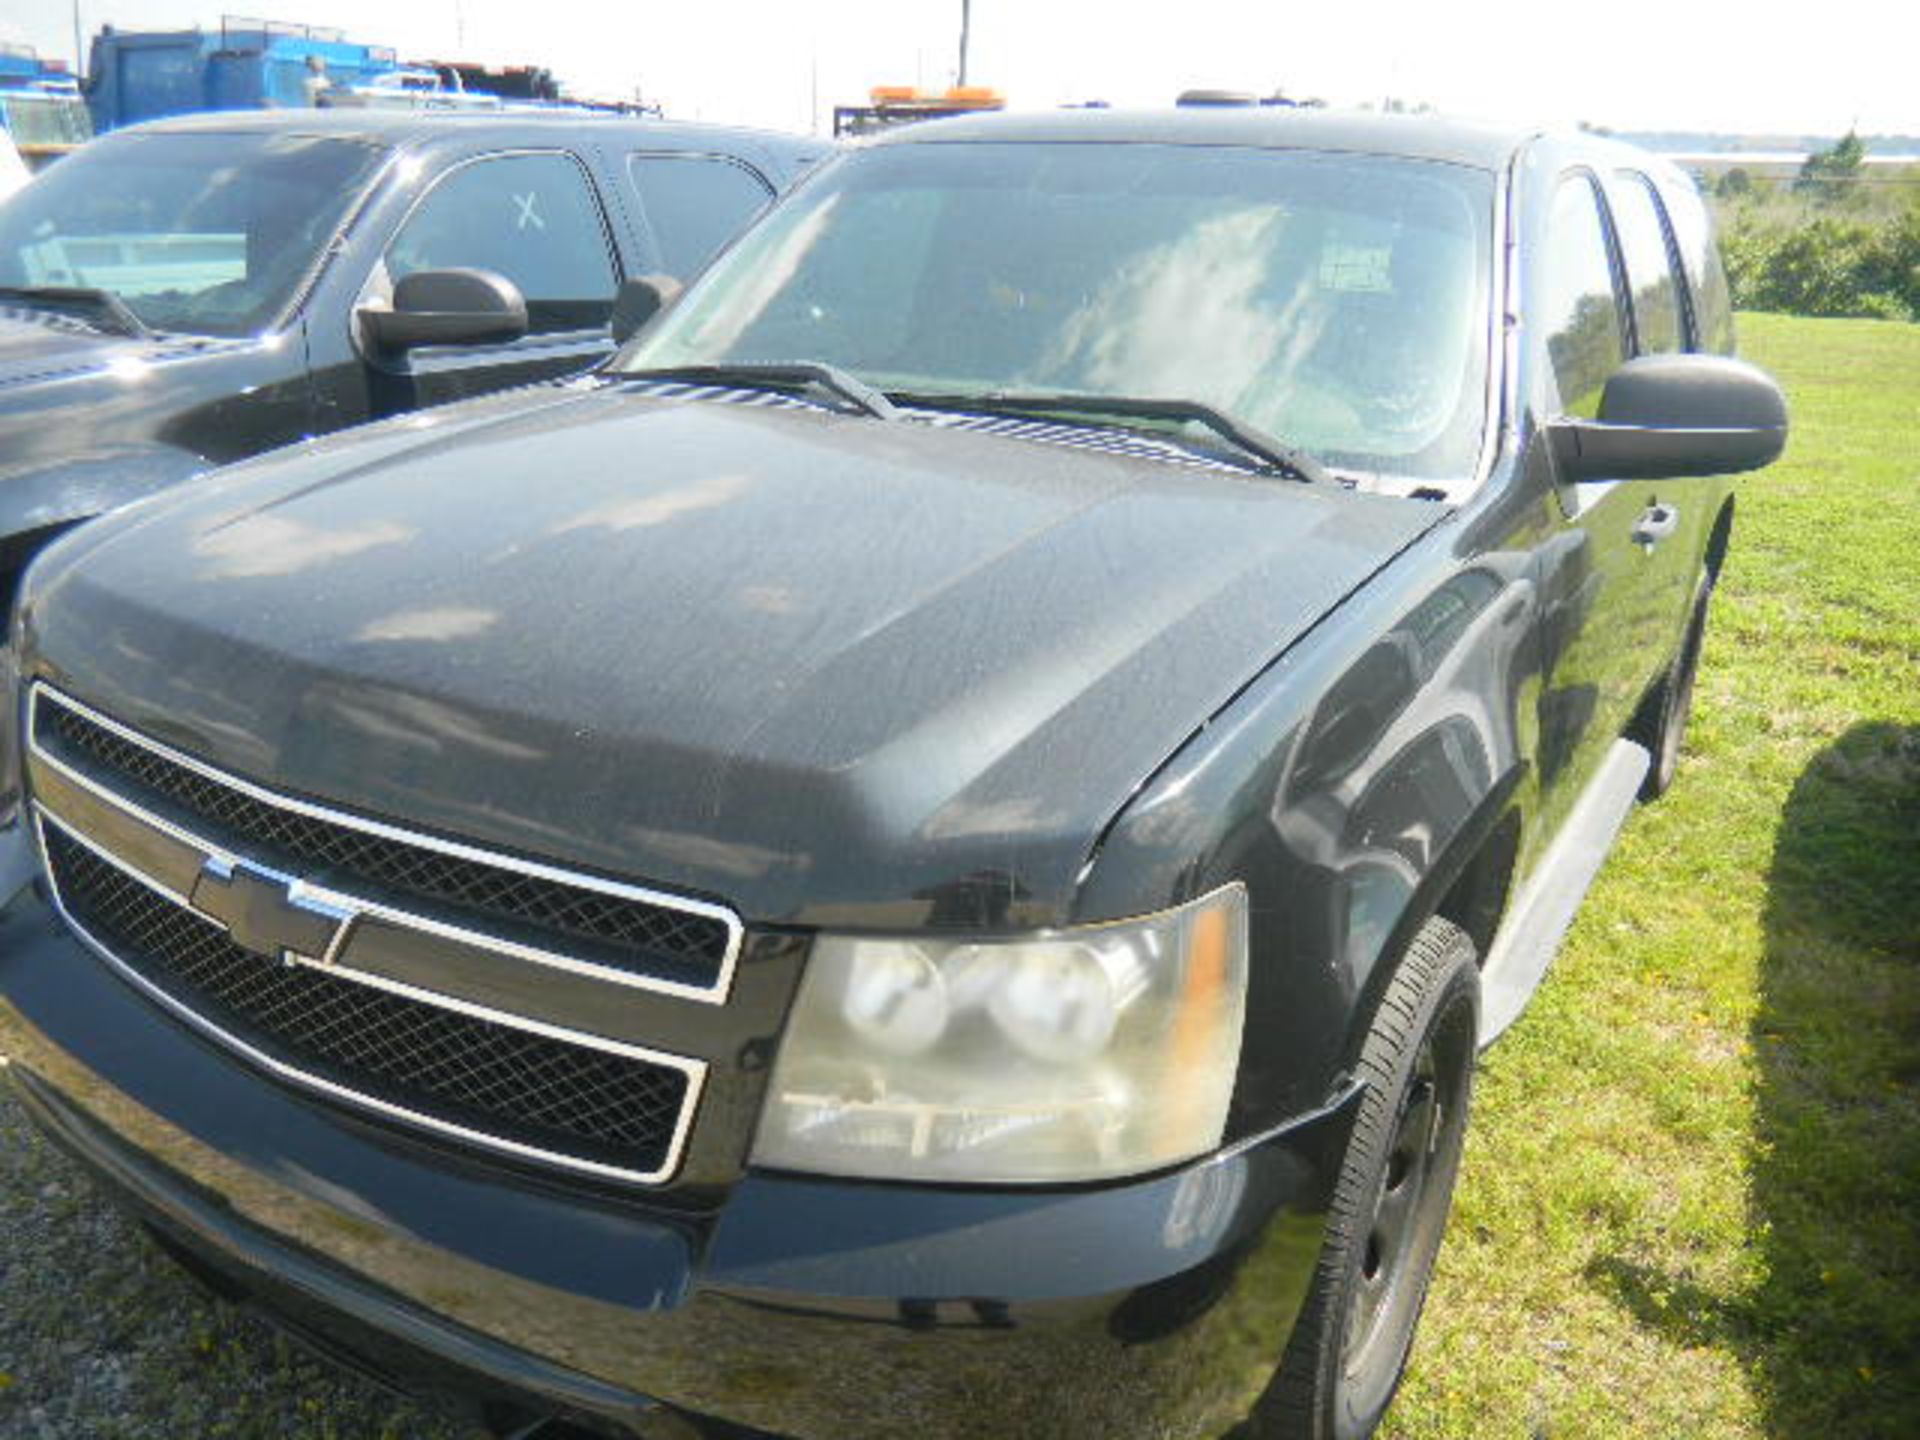 2010 Chevrolet Tahoe SUV Patrol Car - Asset I.D. #245 - Last of Vin (220645) - Image 2 of 7